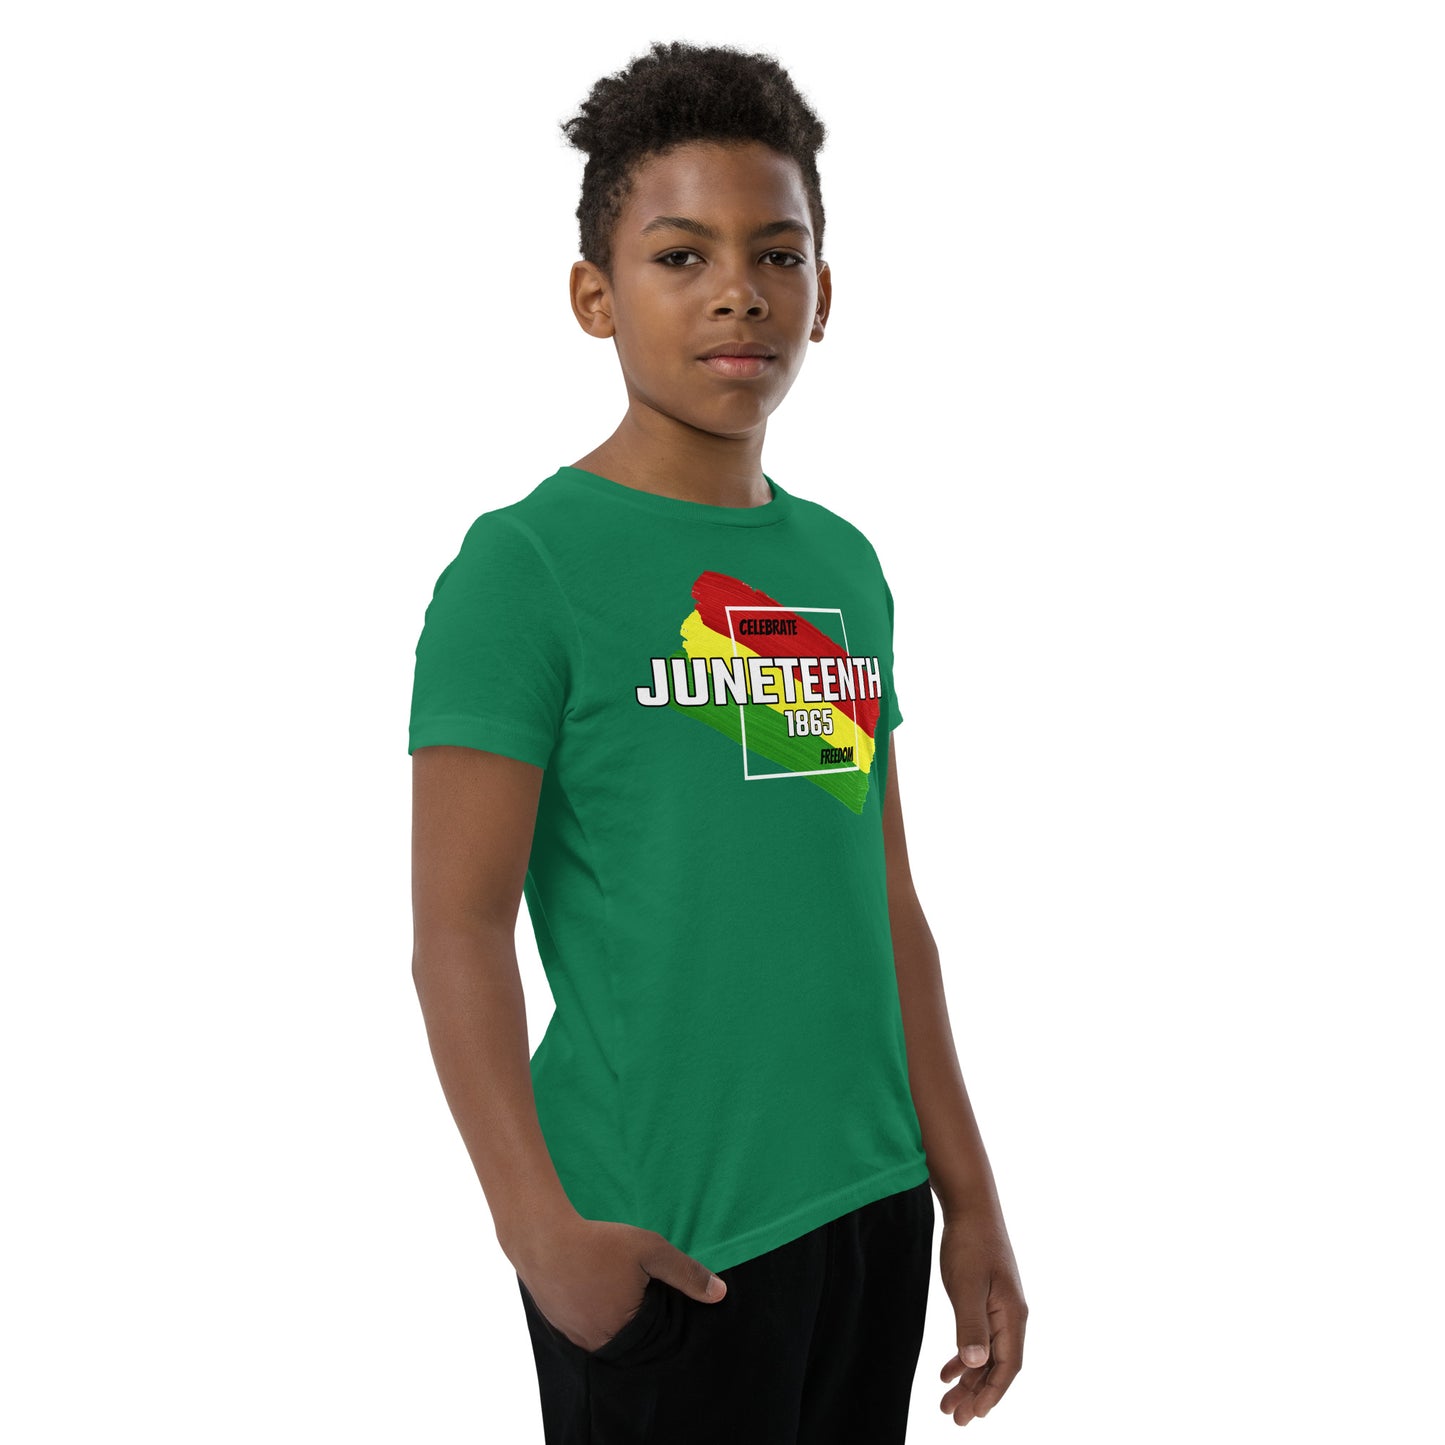 Youth "Juneteenth" T-Shirt